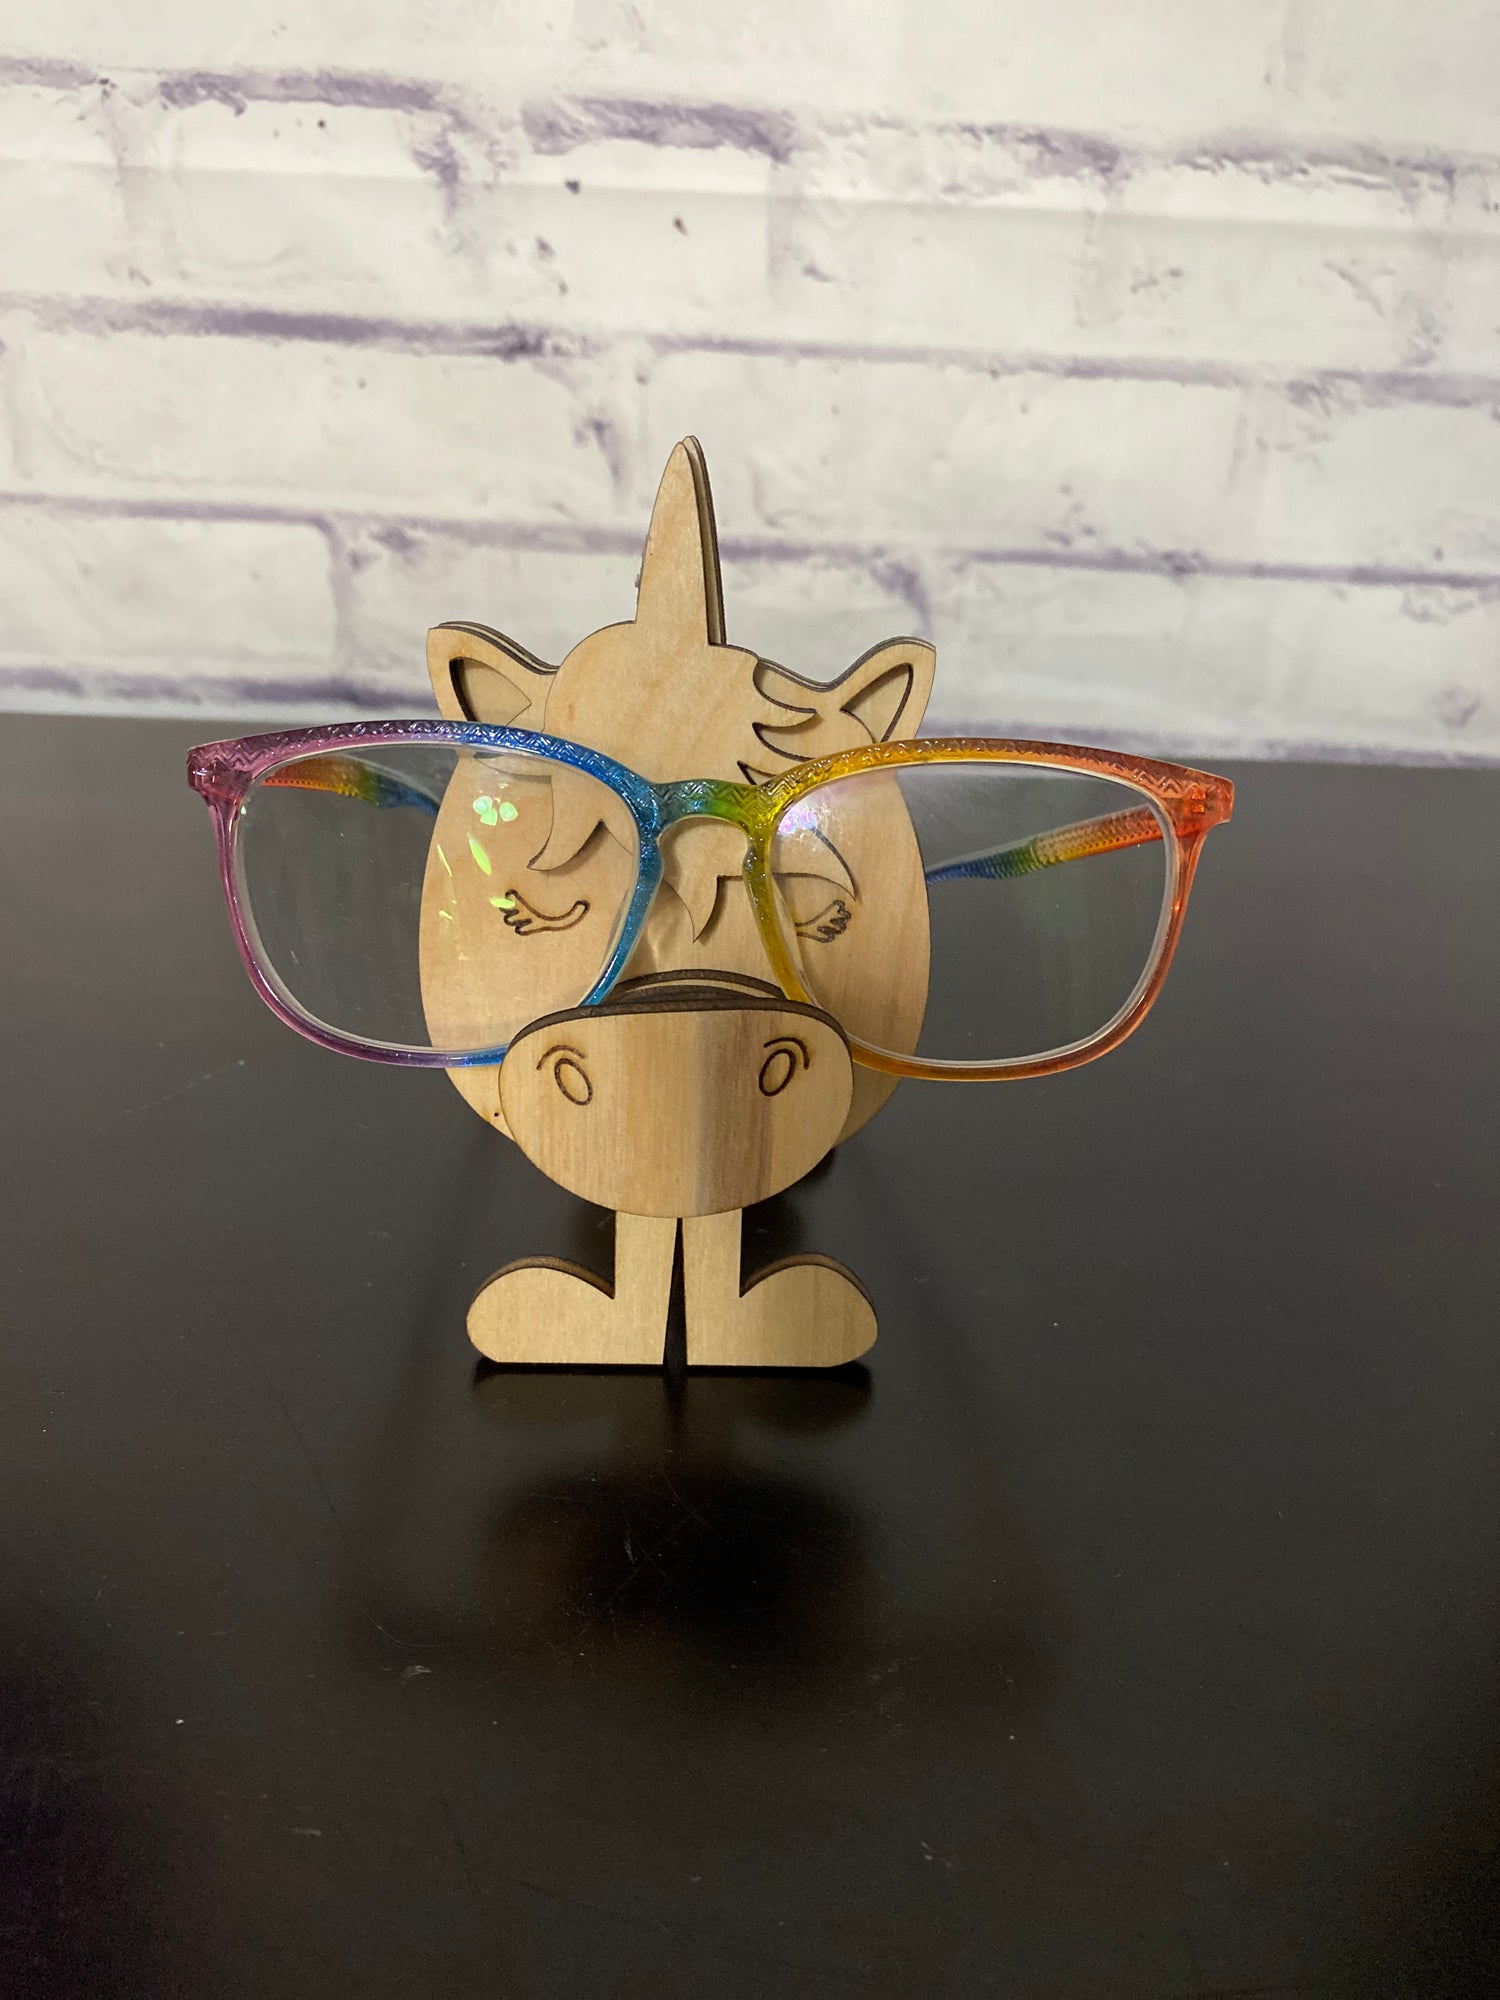 Eyeglass Holder, Unicorn, Hedgehog, Pig, Dino Eyeglass Stand Laser